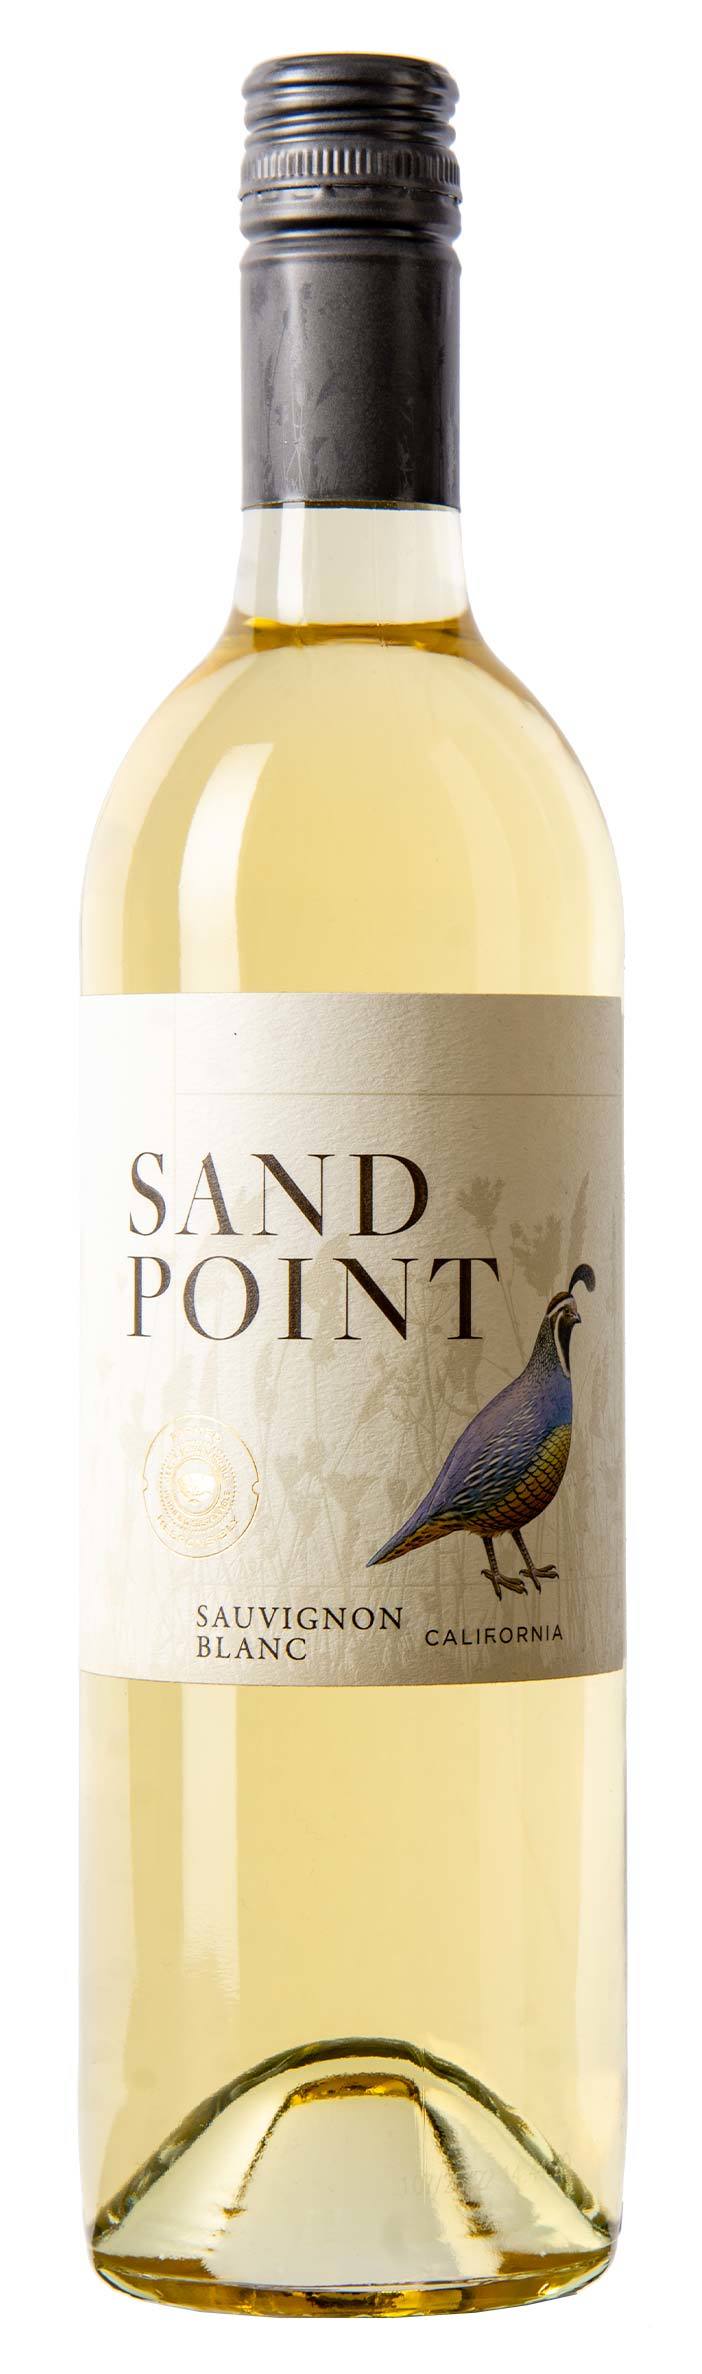 Sand Point Sauvignon Blanc